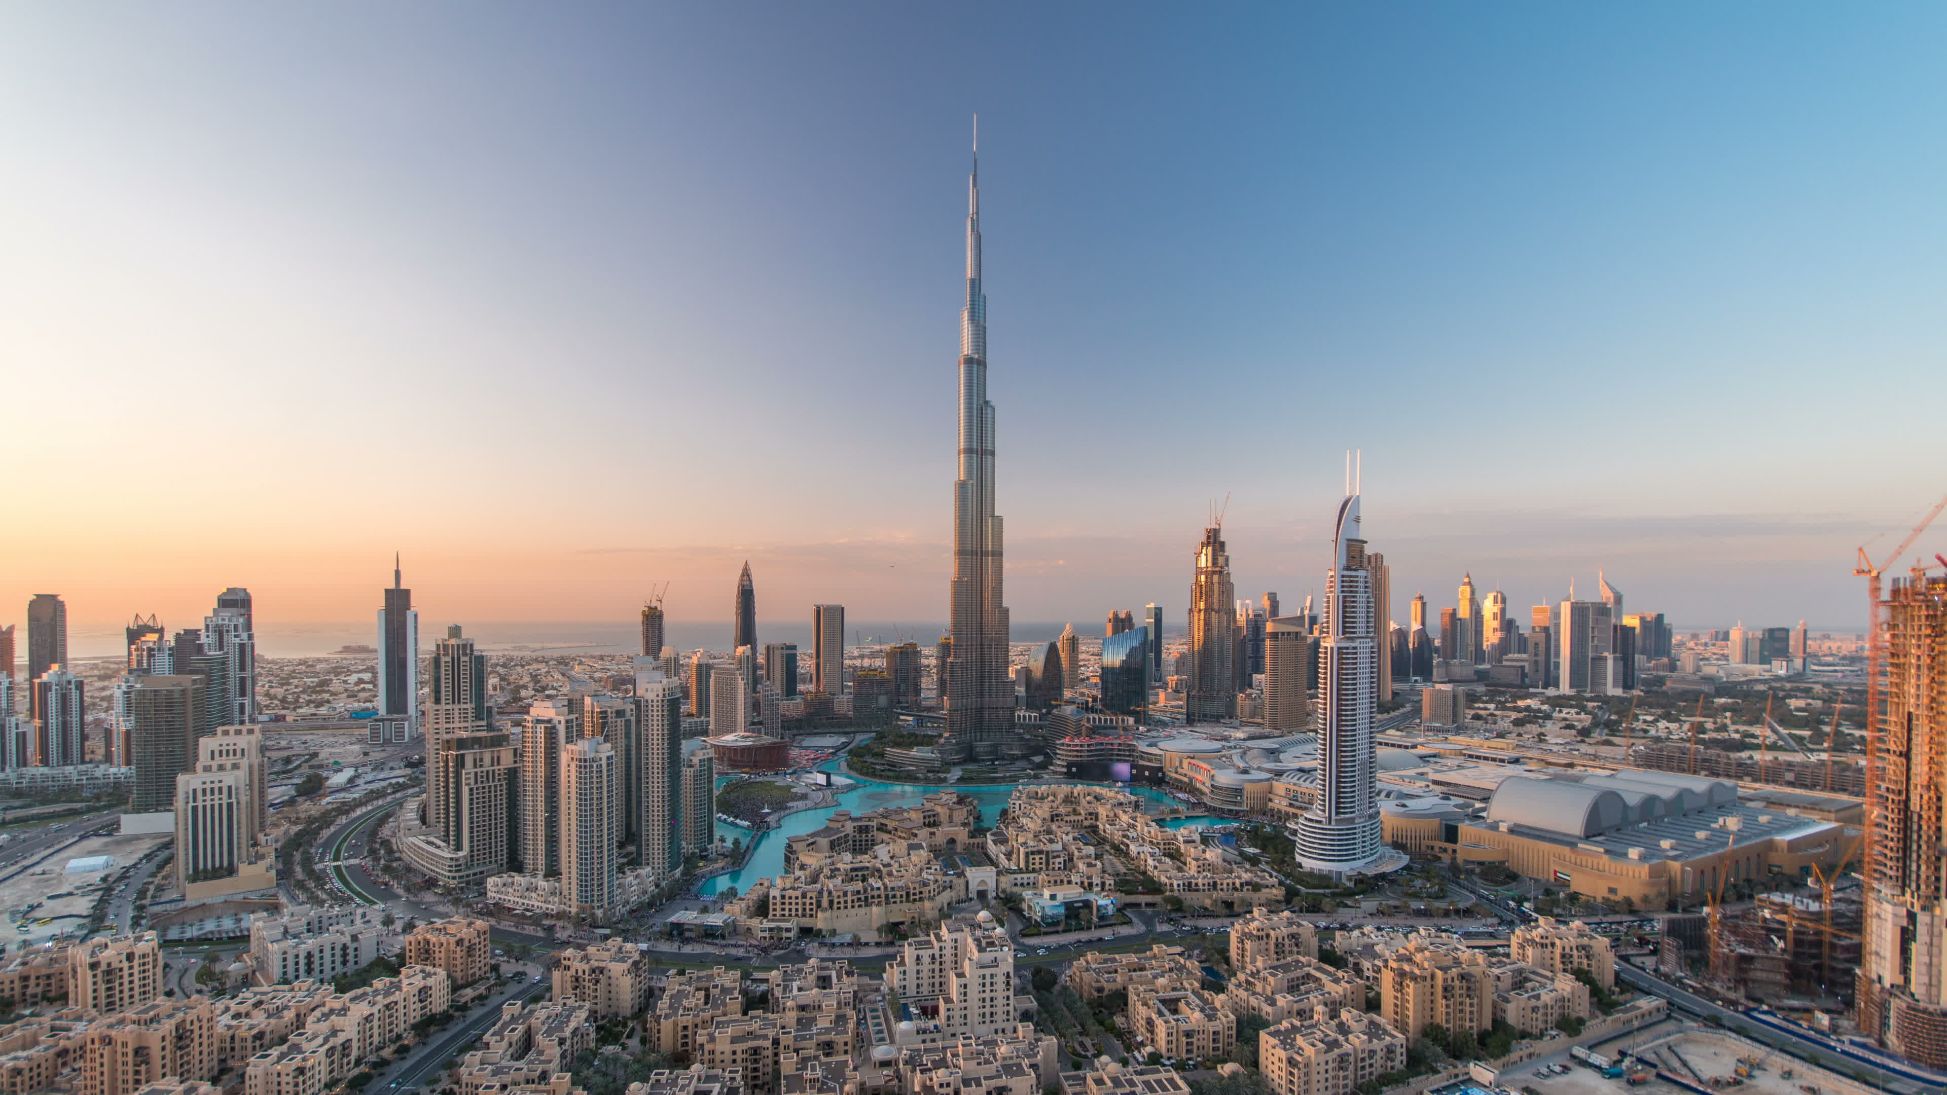 burj khalifa - tallest building in the world